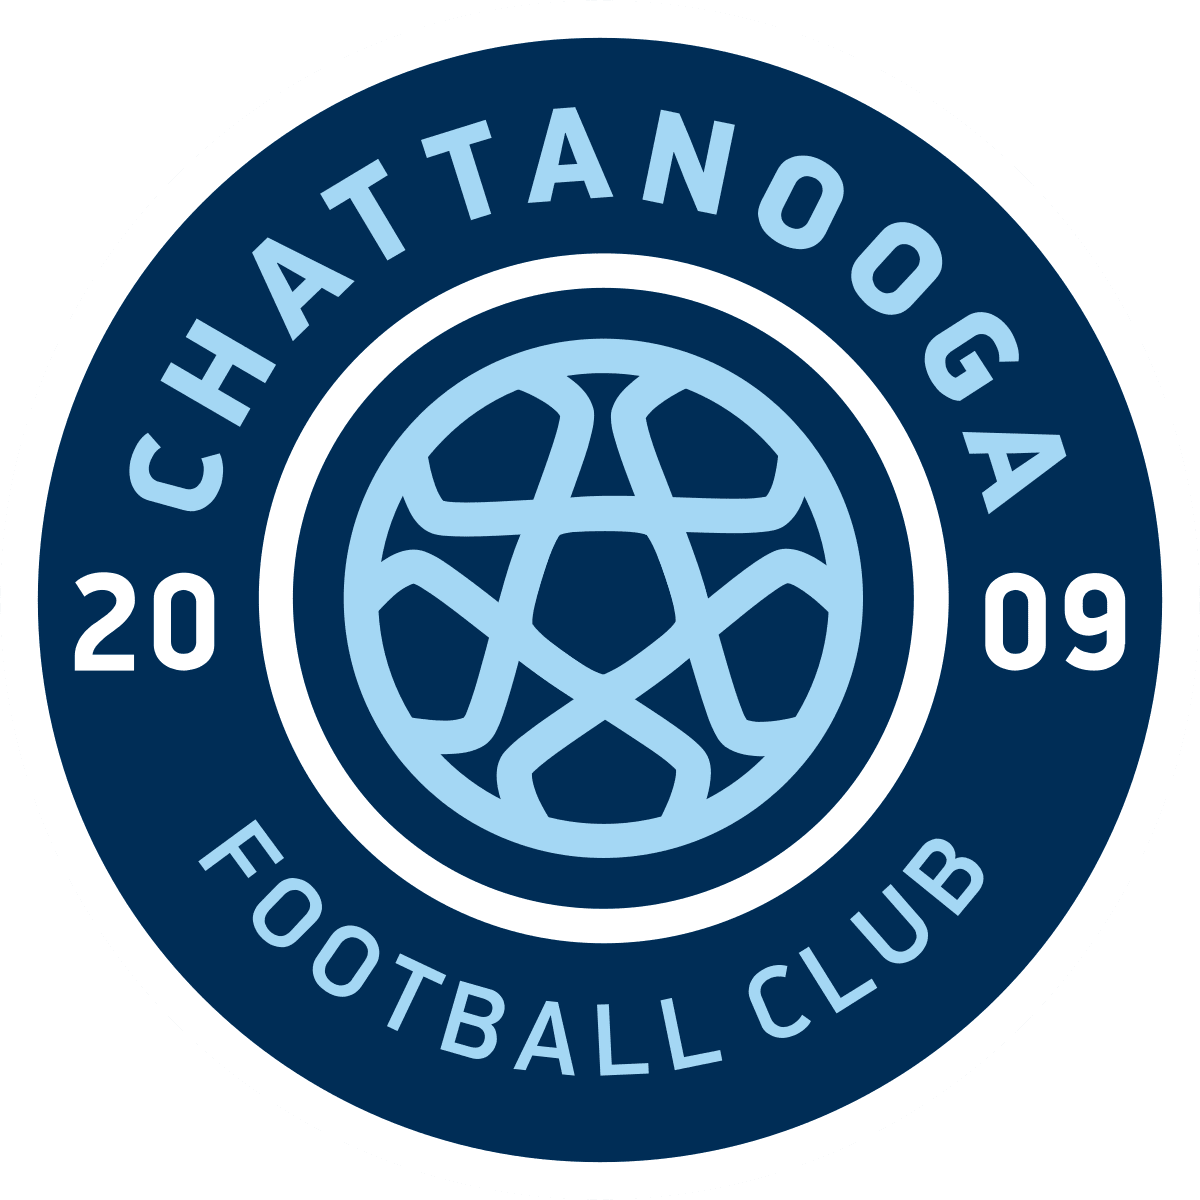 Chattanooga Football Club